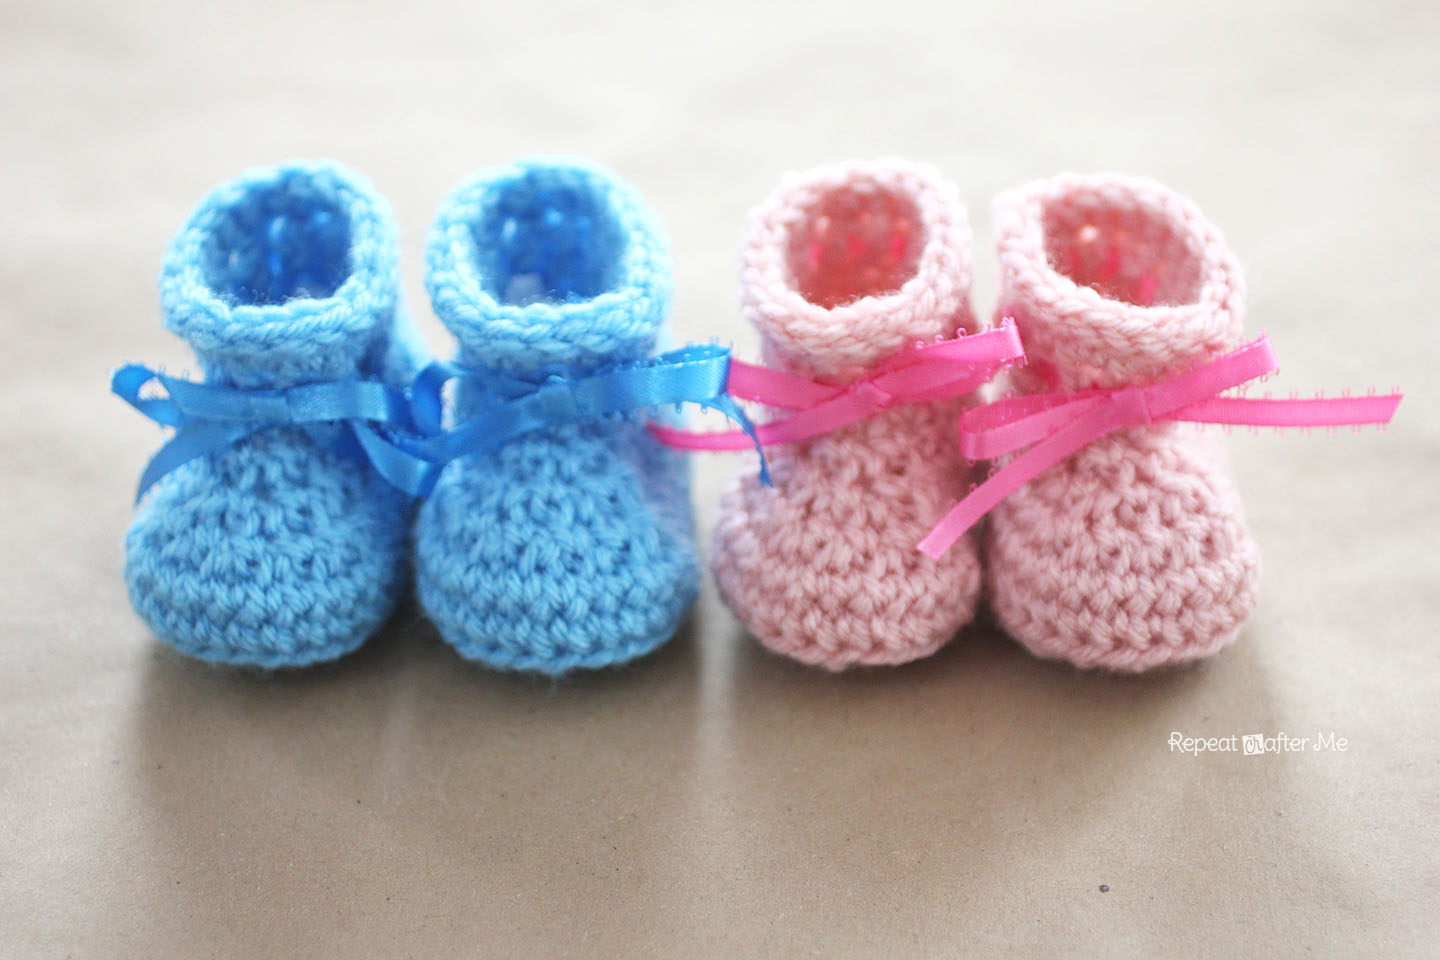 Crochet Pattern For Baby Booties Crochet Newborn Ba Booties Pattern Repeat Crafter Me